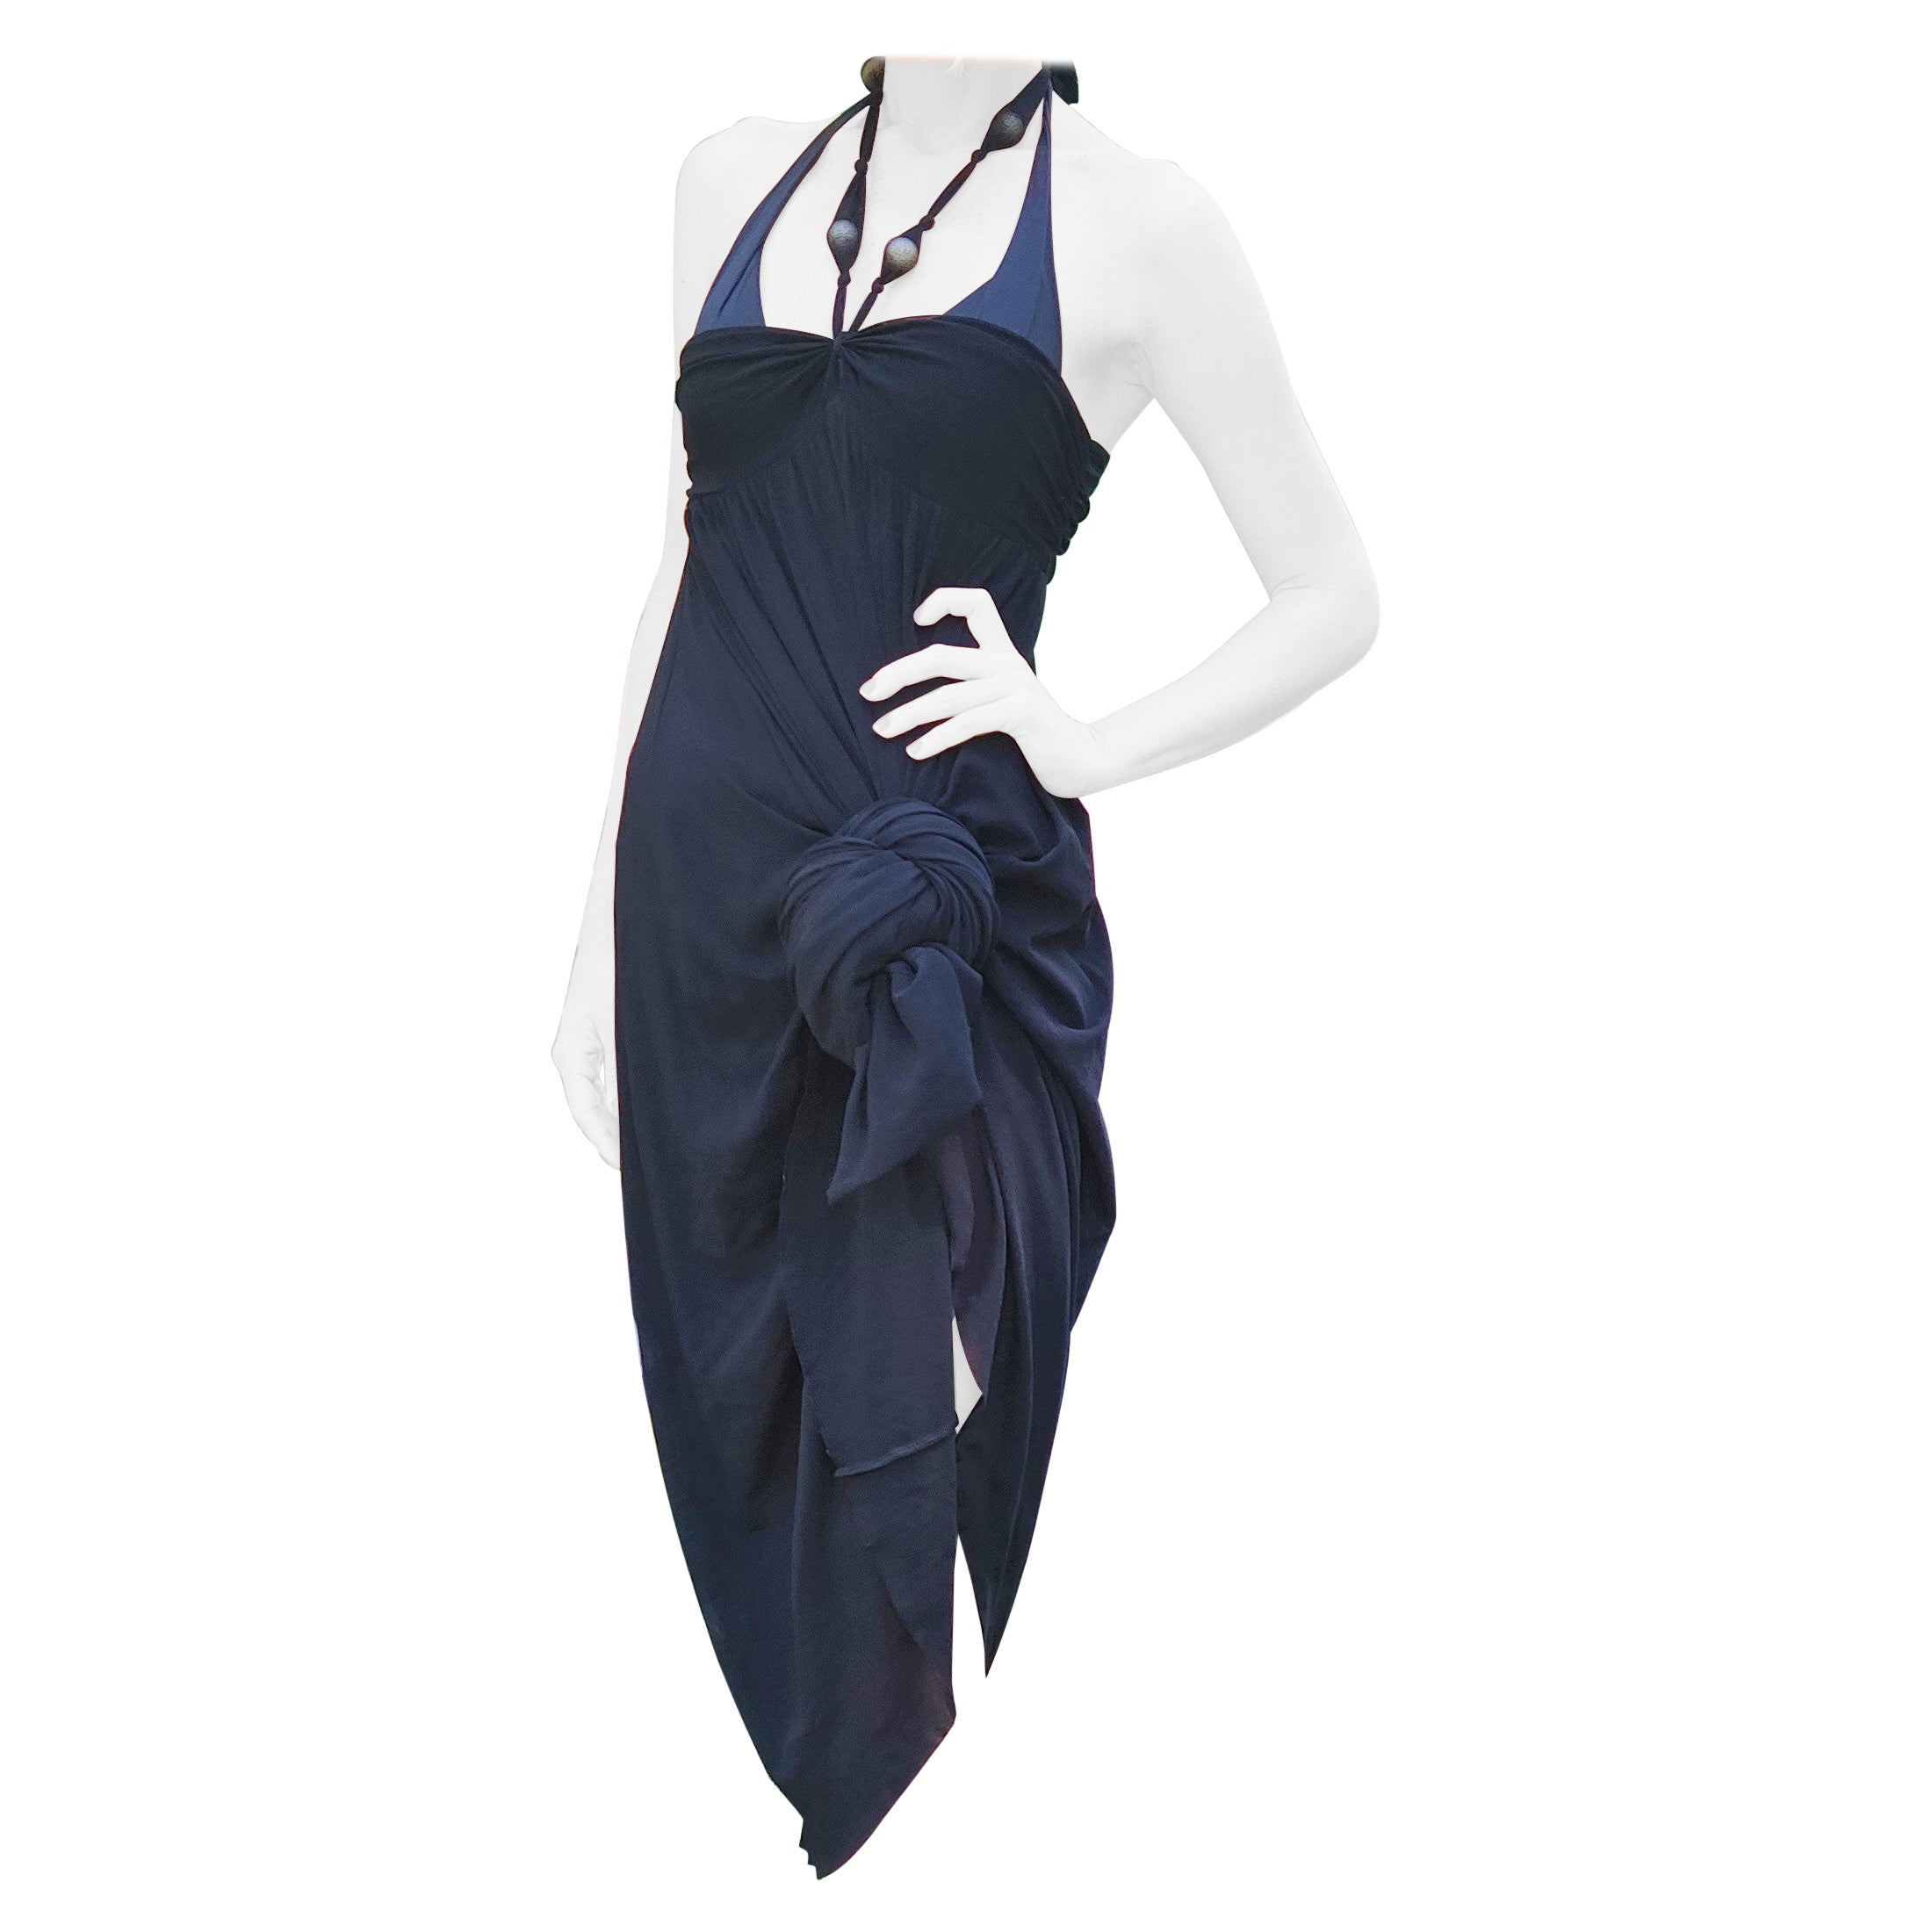 Jean Paul Gaultier Mesh Summer Beach Evening Transparent Vintage Maxi Dress For Sale